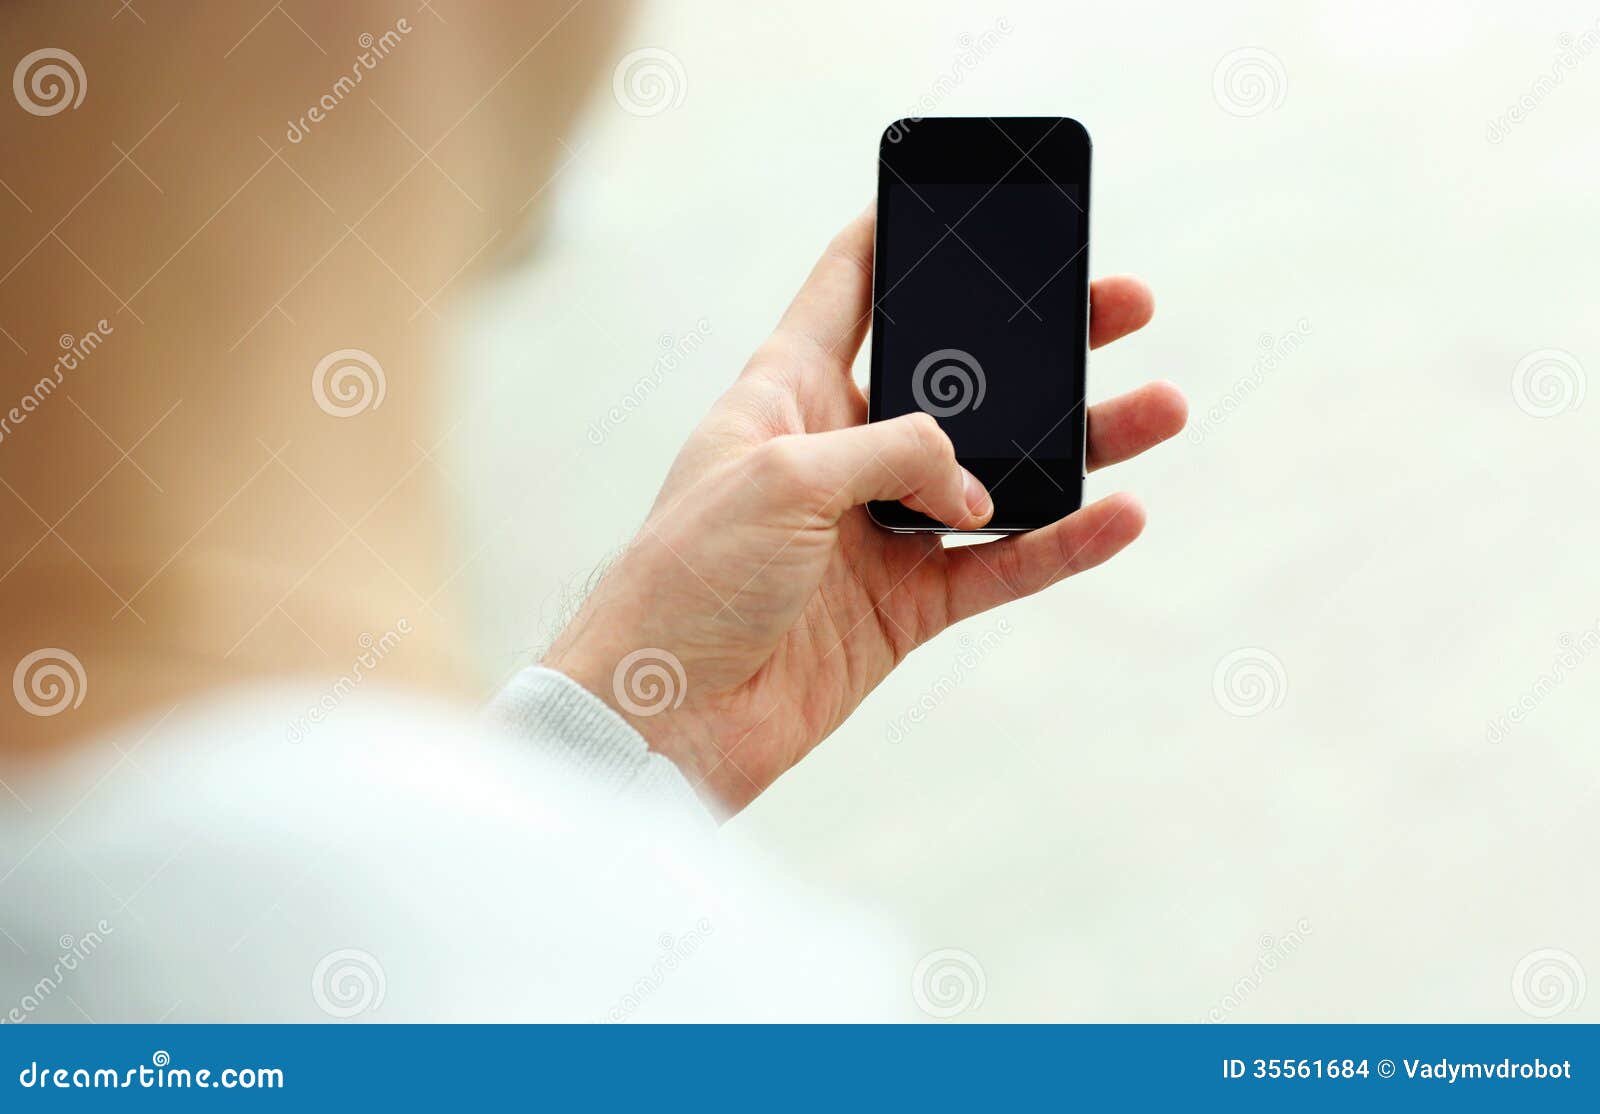 Closeup Image of a Man Looking at Blank Smartphone Display Stock Photo ...